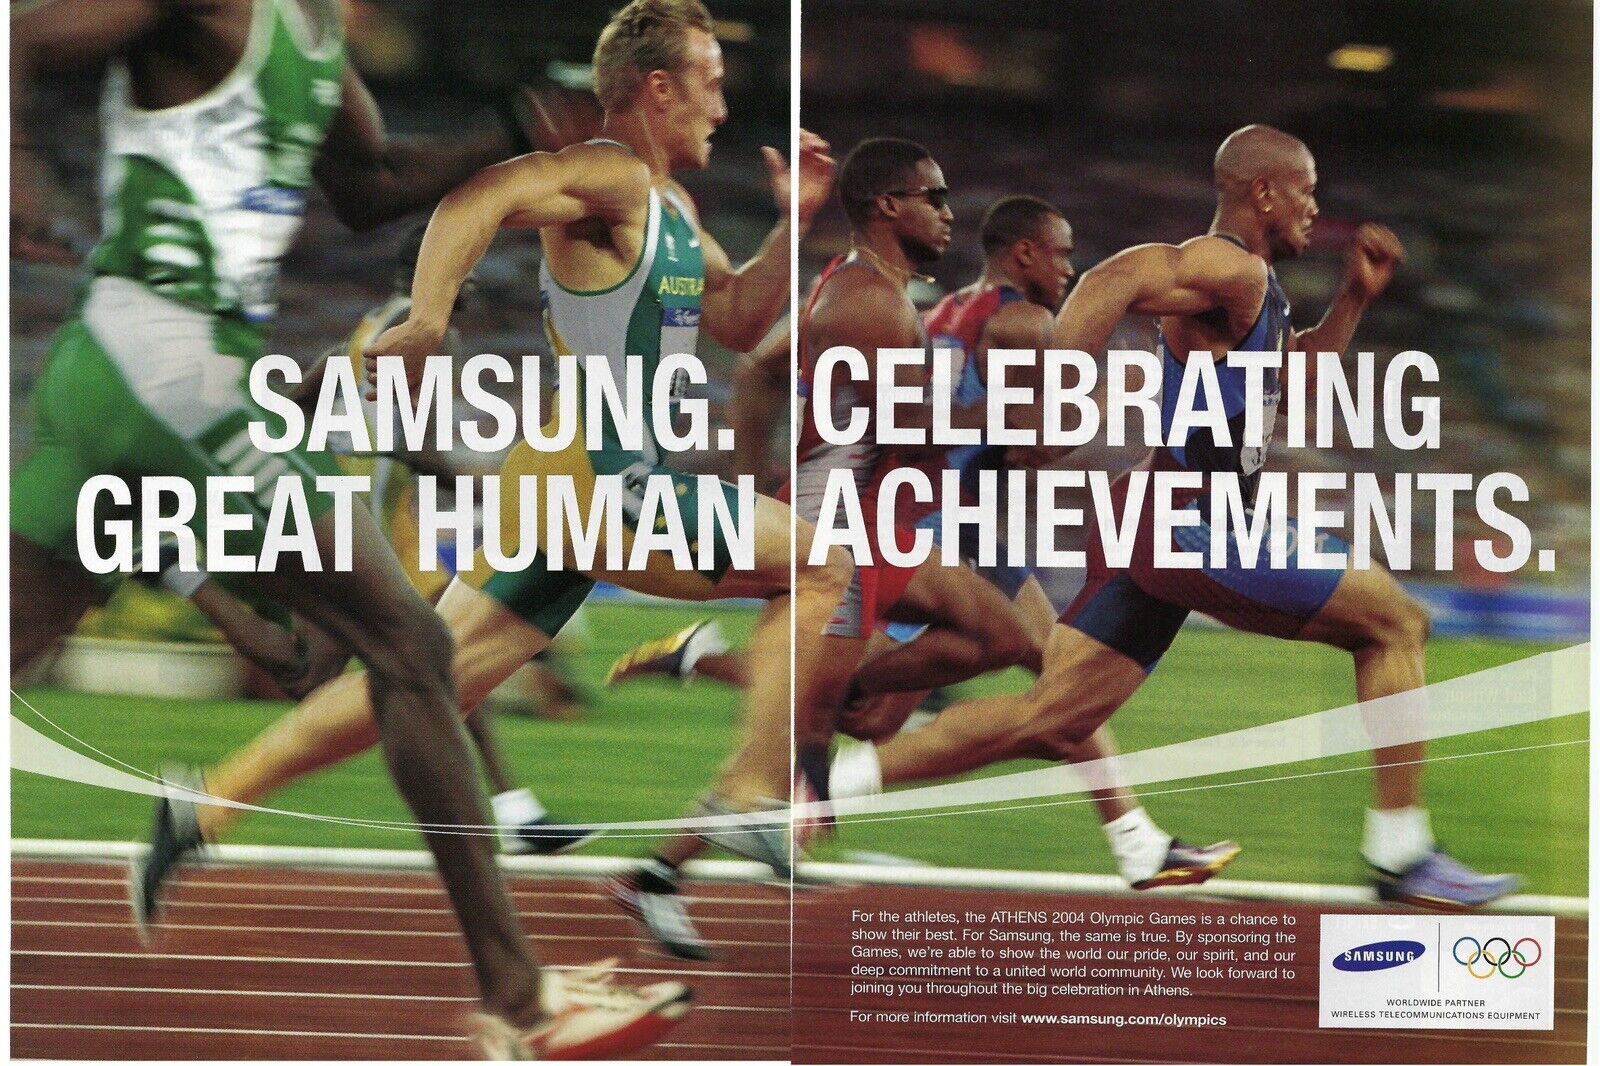 2004 Samsung Celebrating Human Achievements Olympic Games Retro Print Ad/Poster